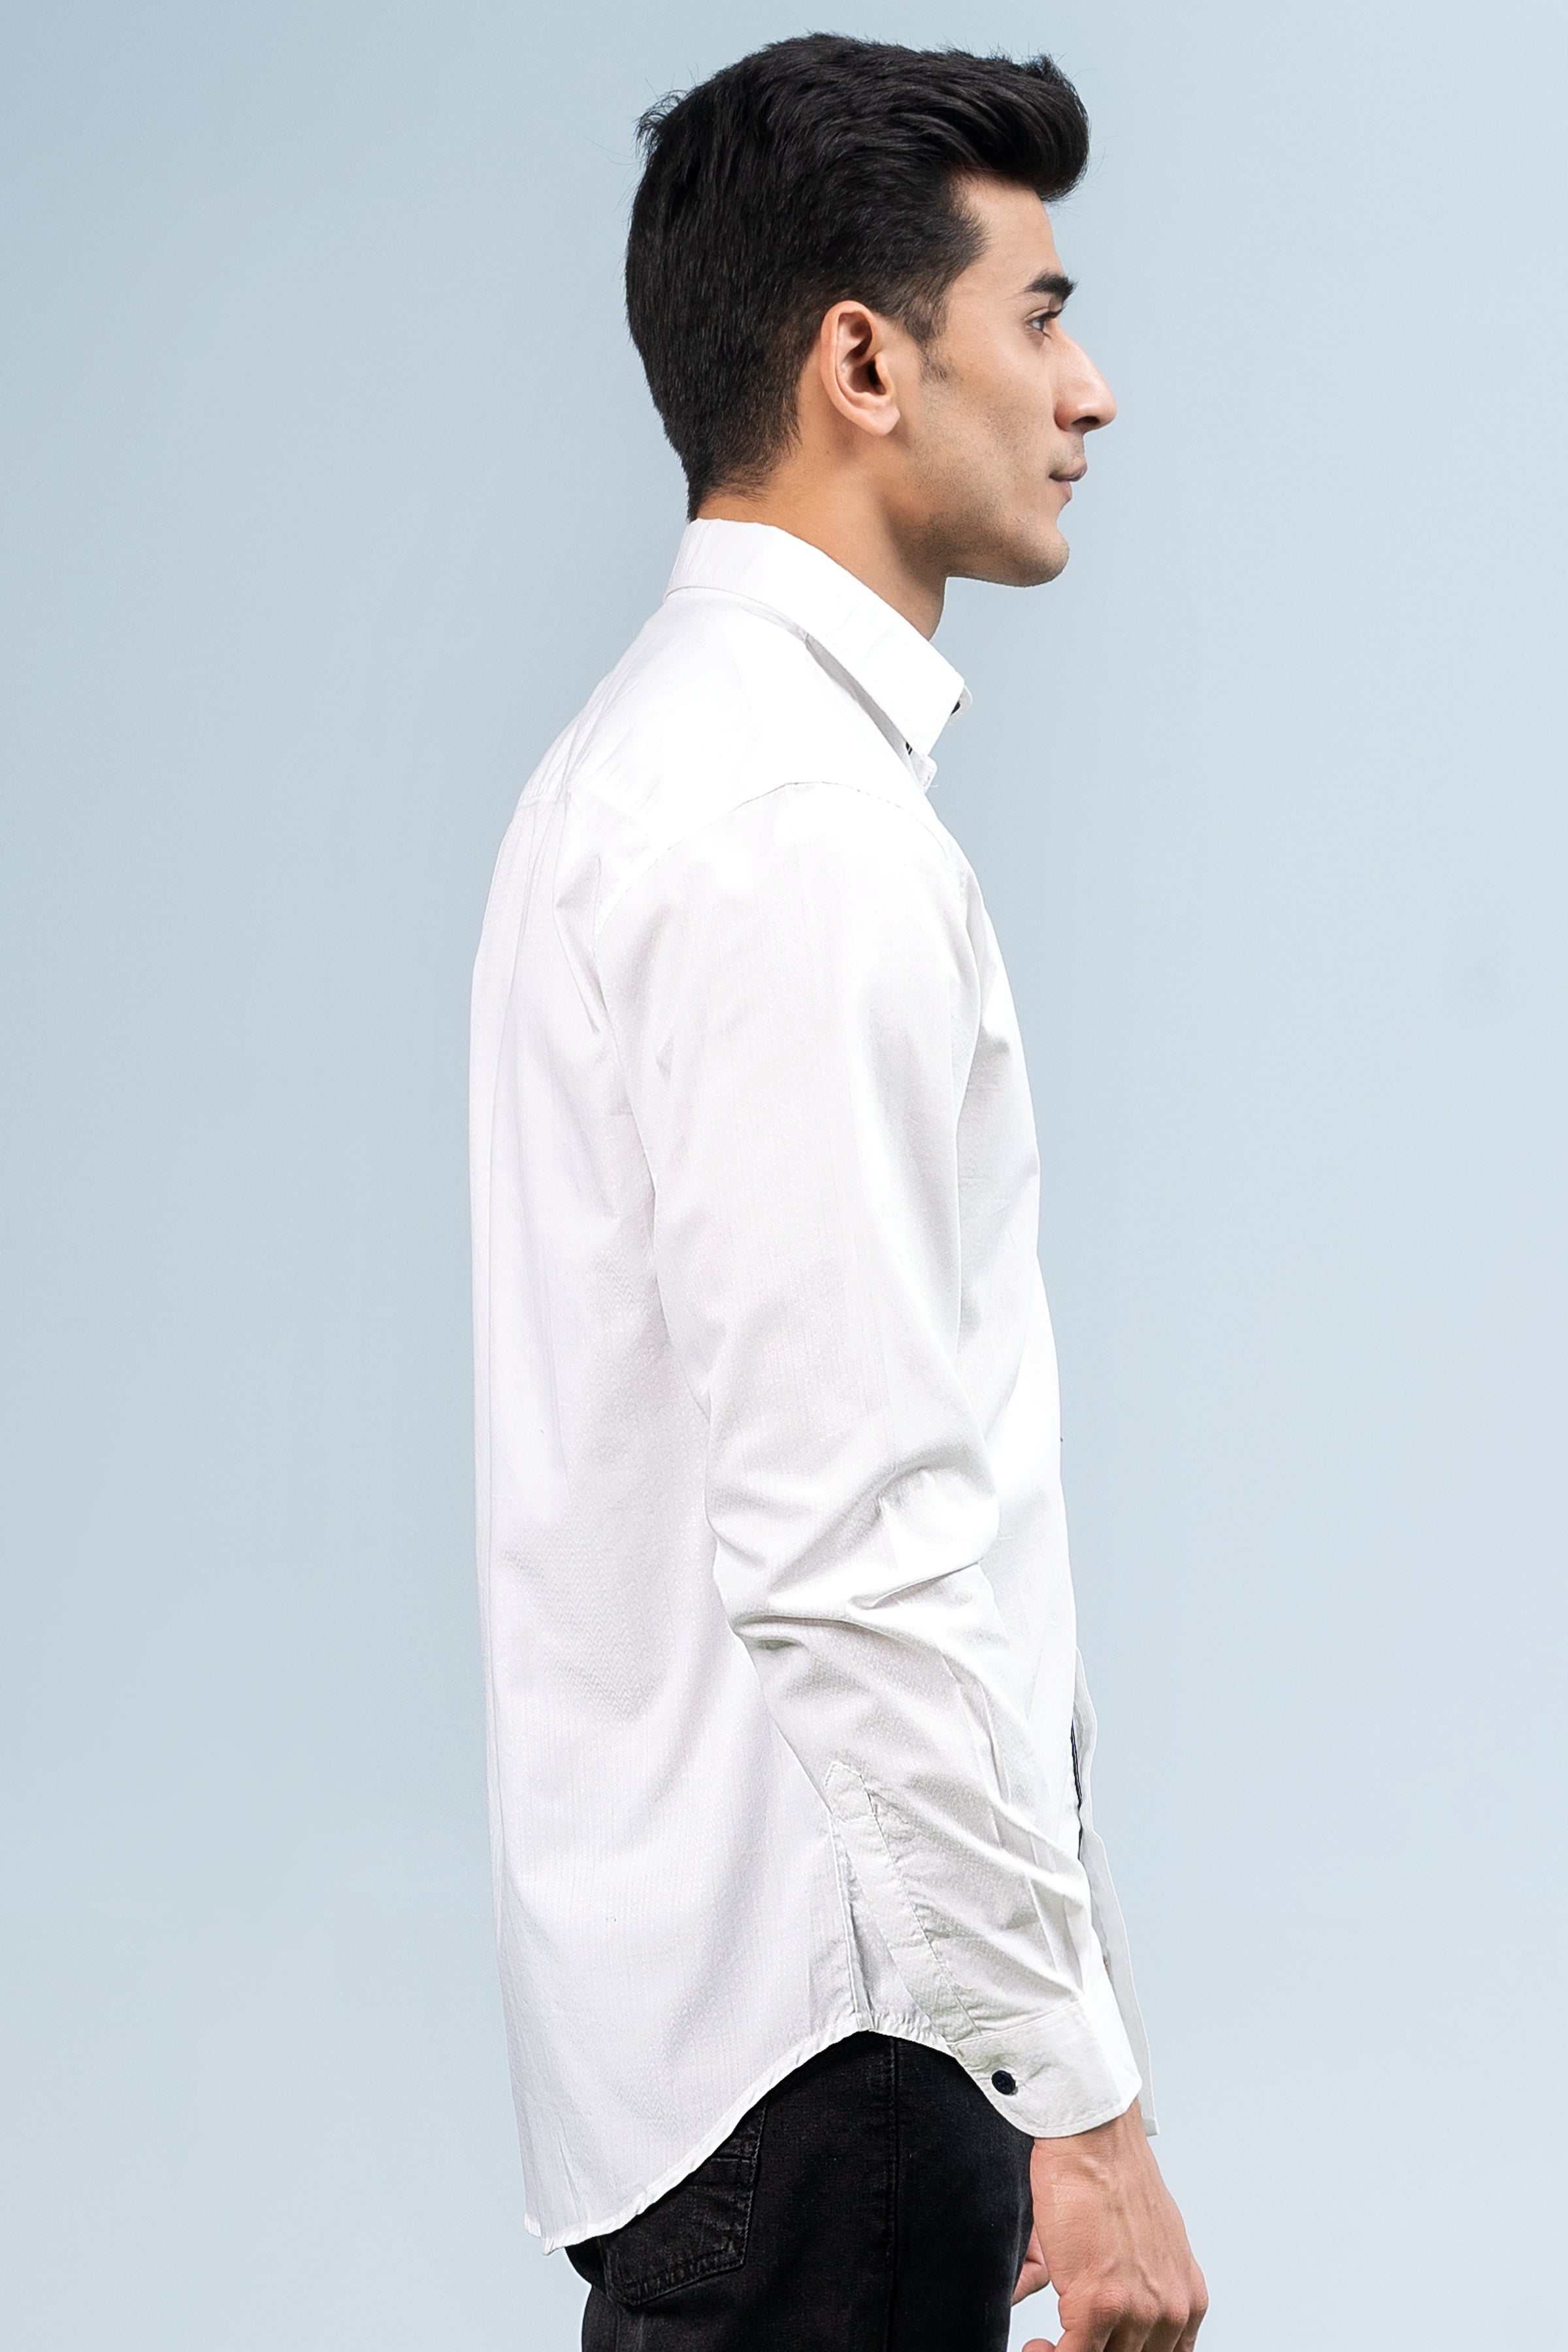 CASUAL SHIRT WHITE at Charcoal Clothing